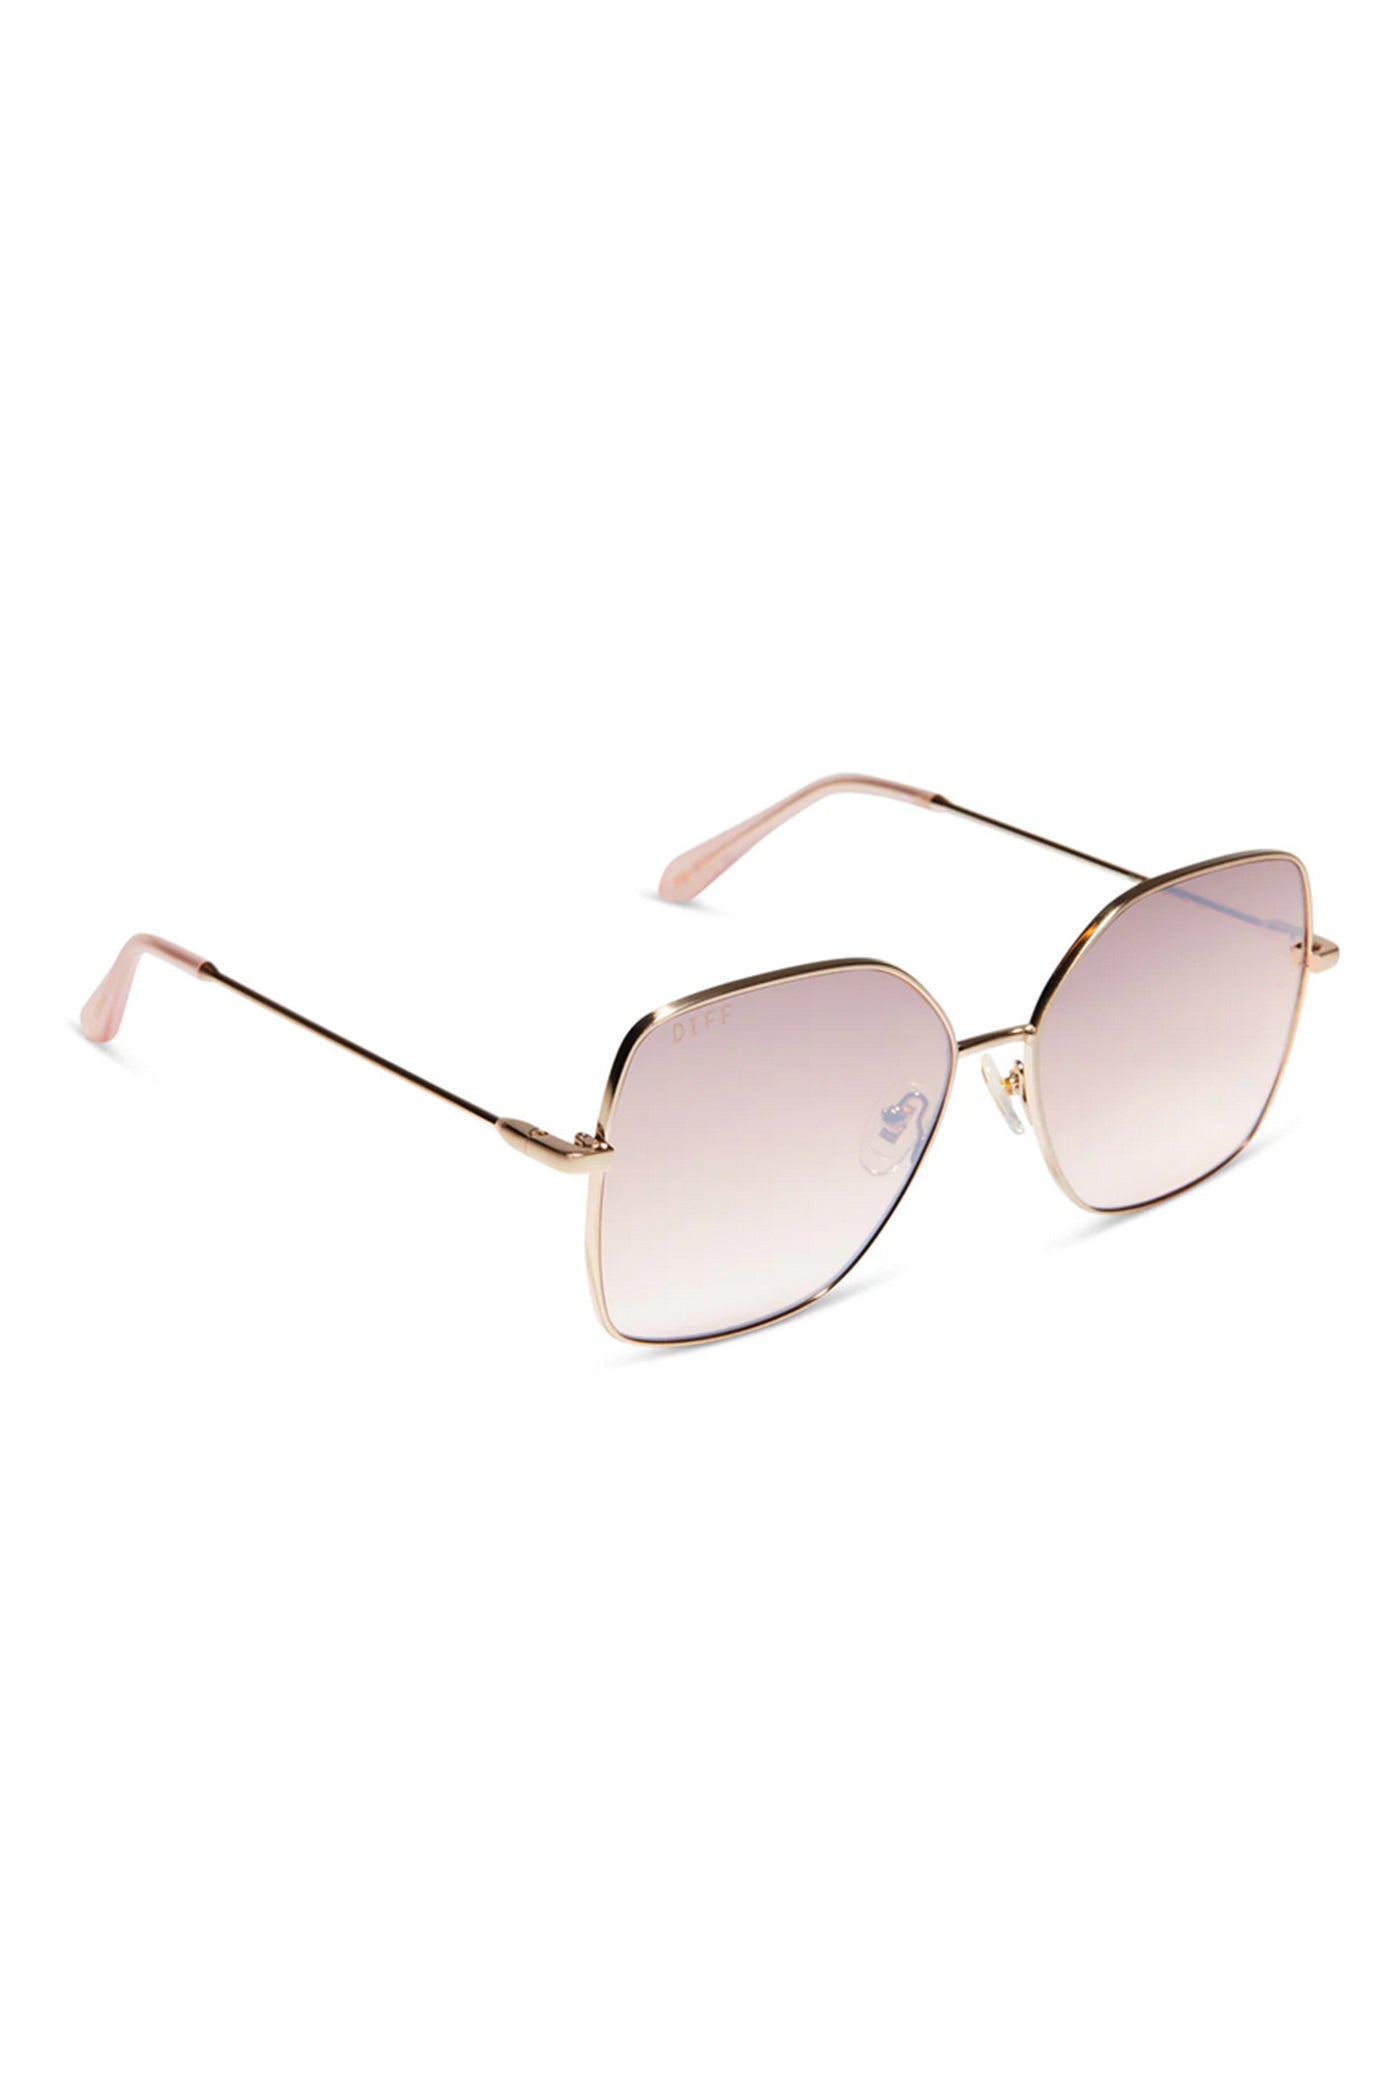 Lenox Sunglasses by DIFF